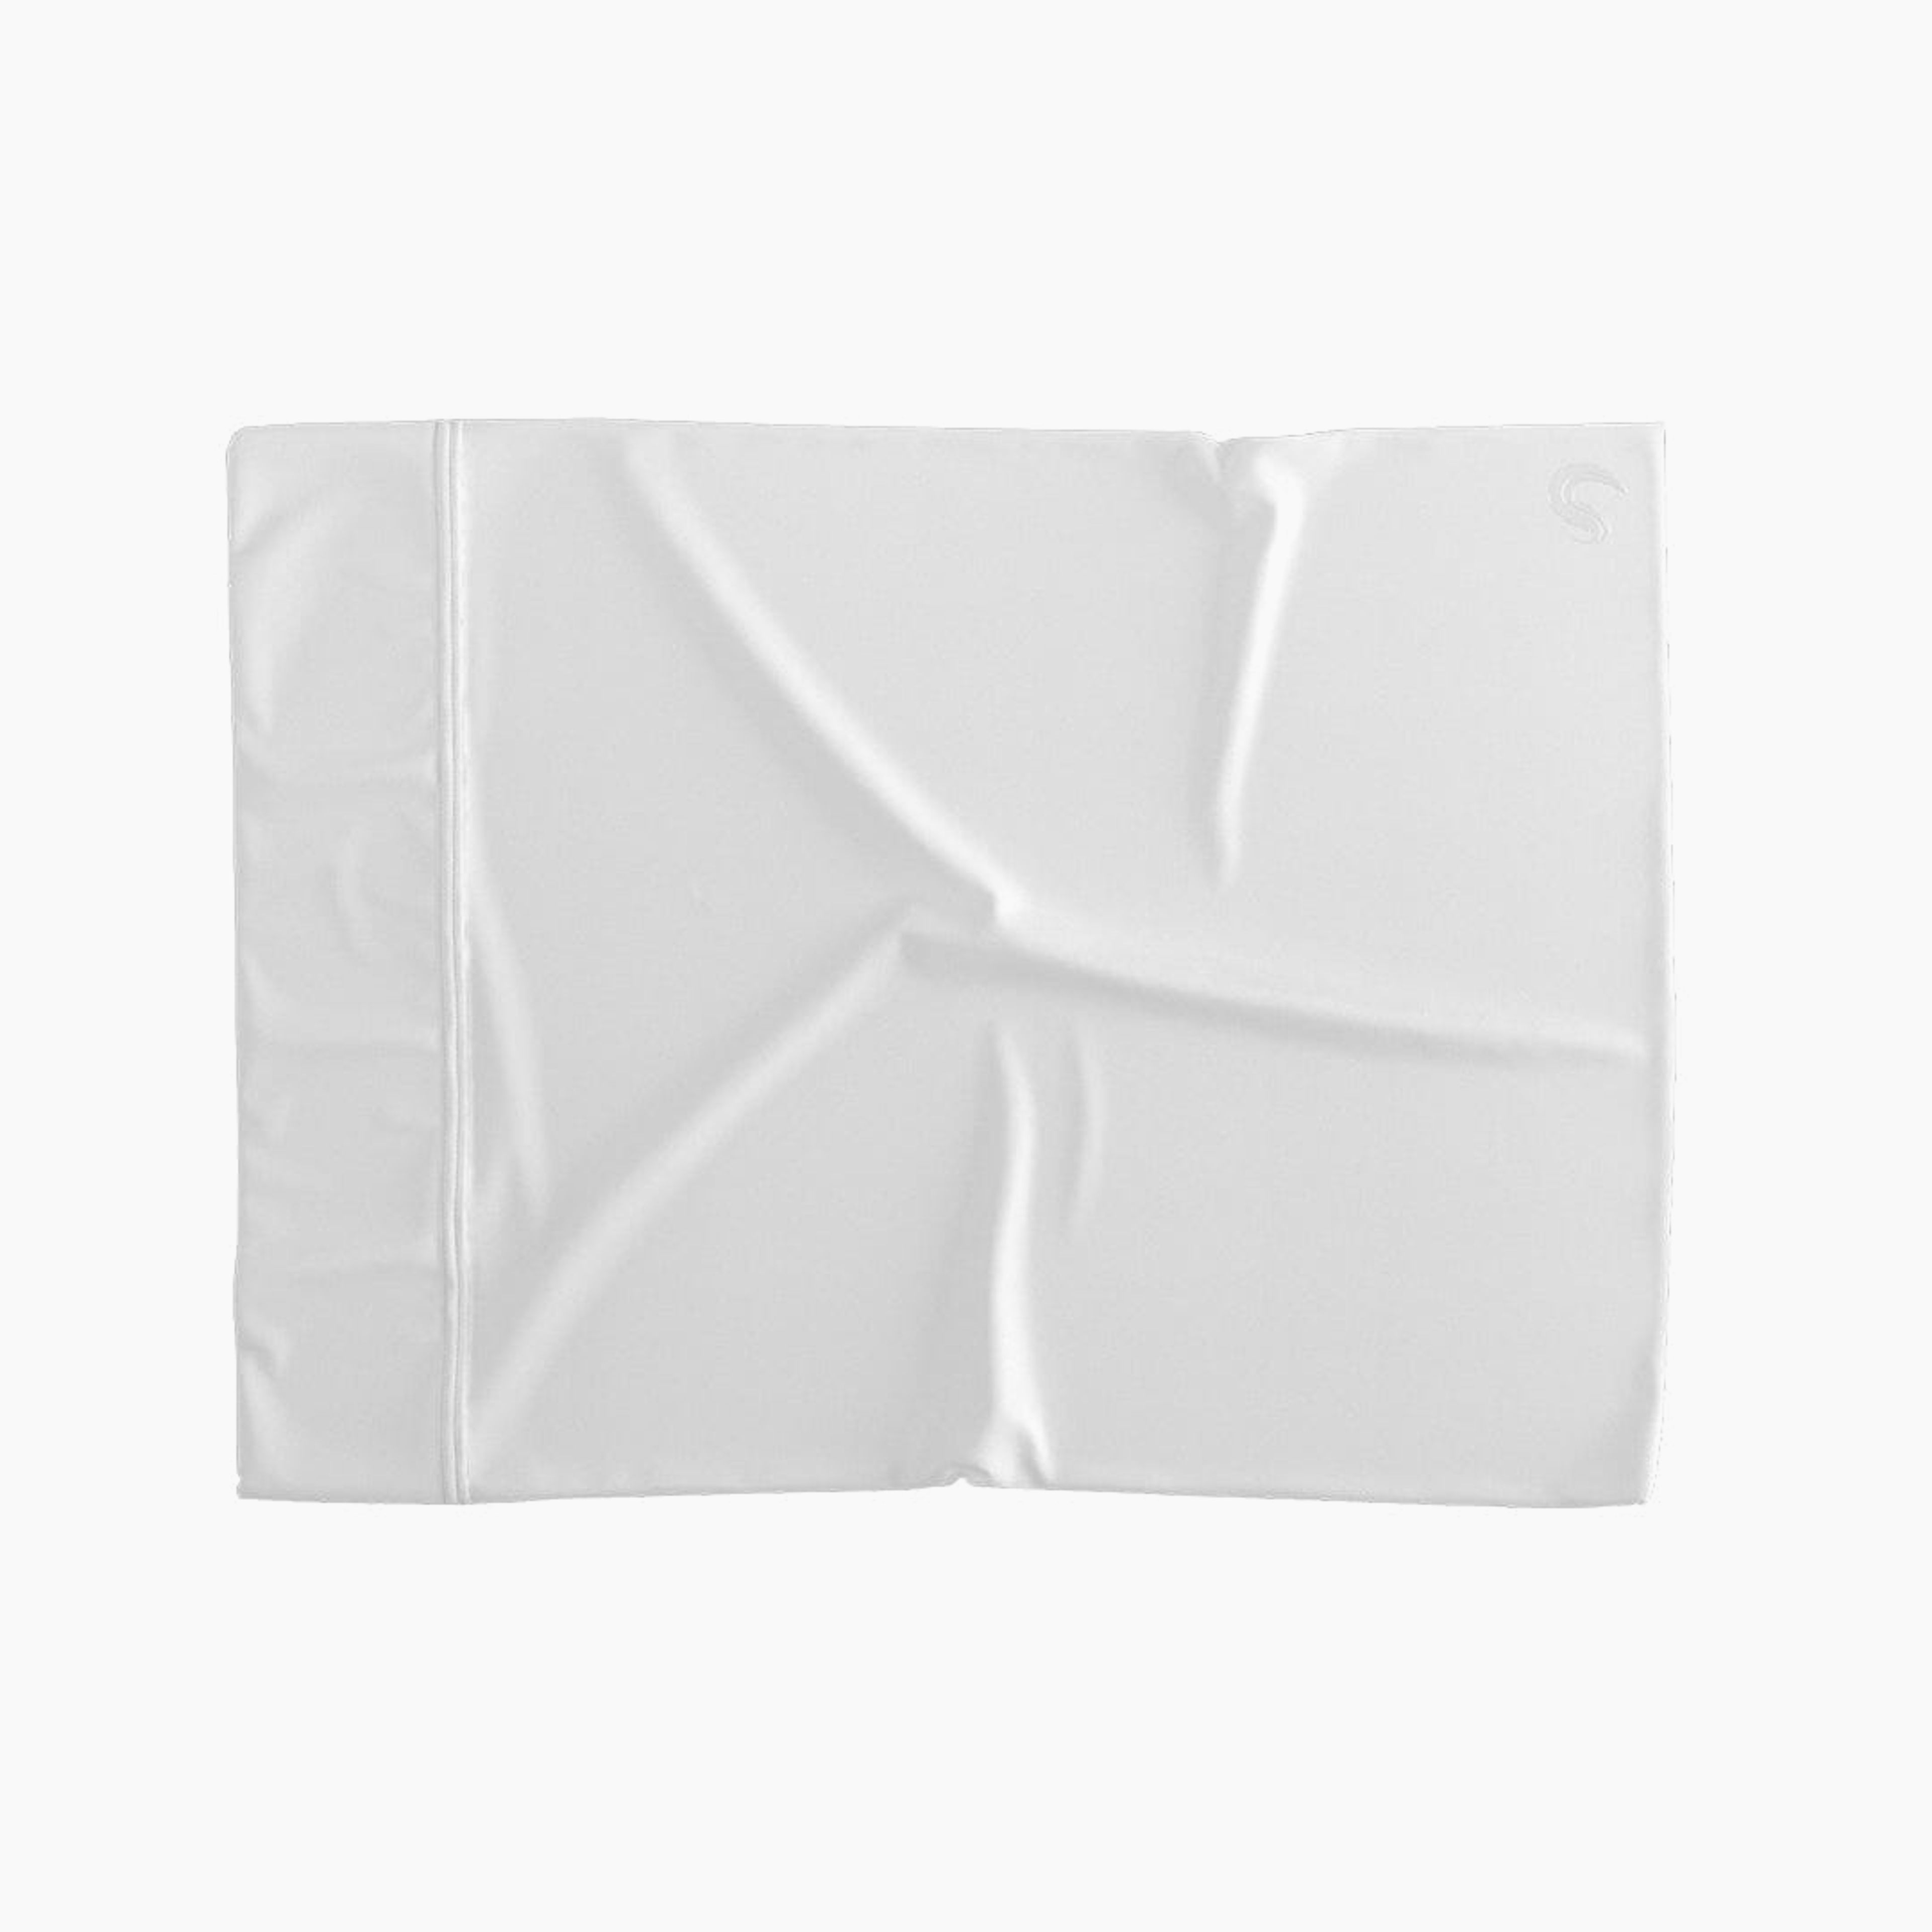 Cotton Pillowcase (2-pack)